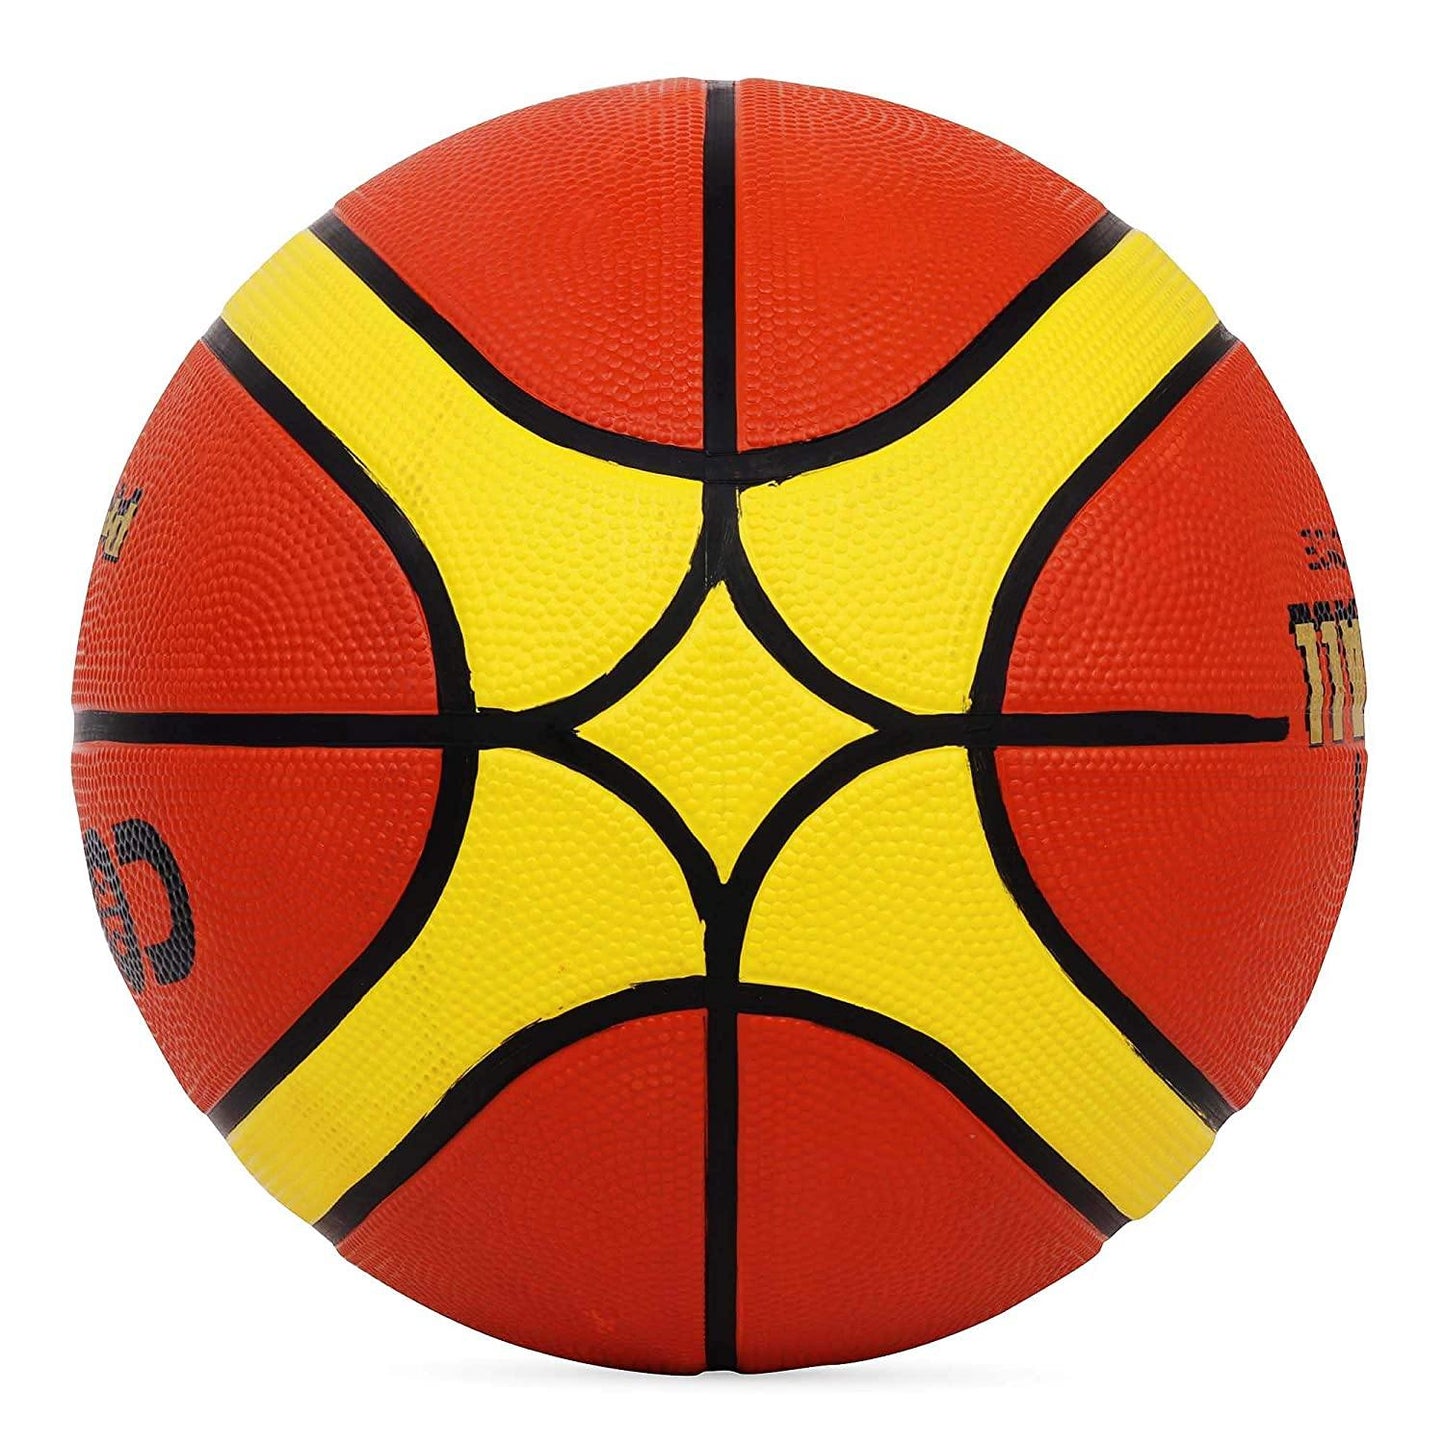 Cosco Premier Basketball 5 - Orange - Best Price online Prokicksports.com